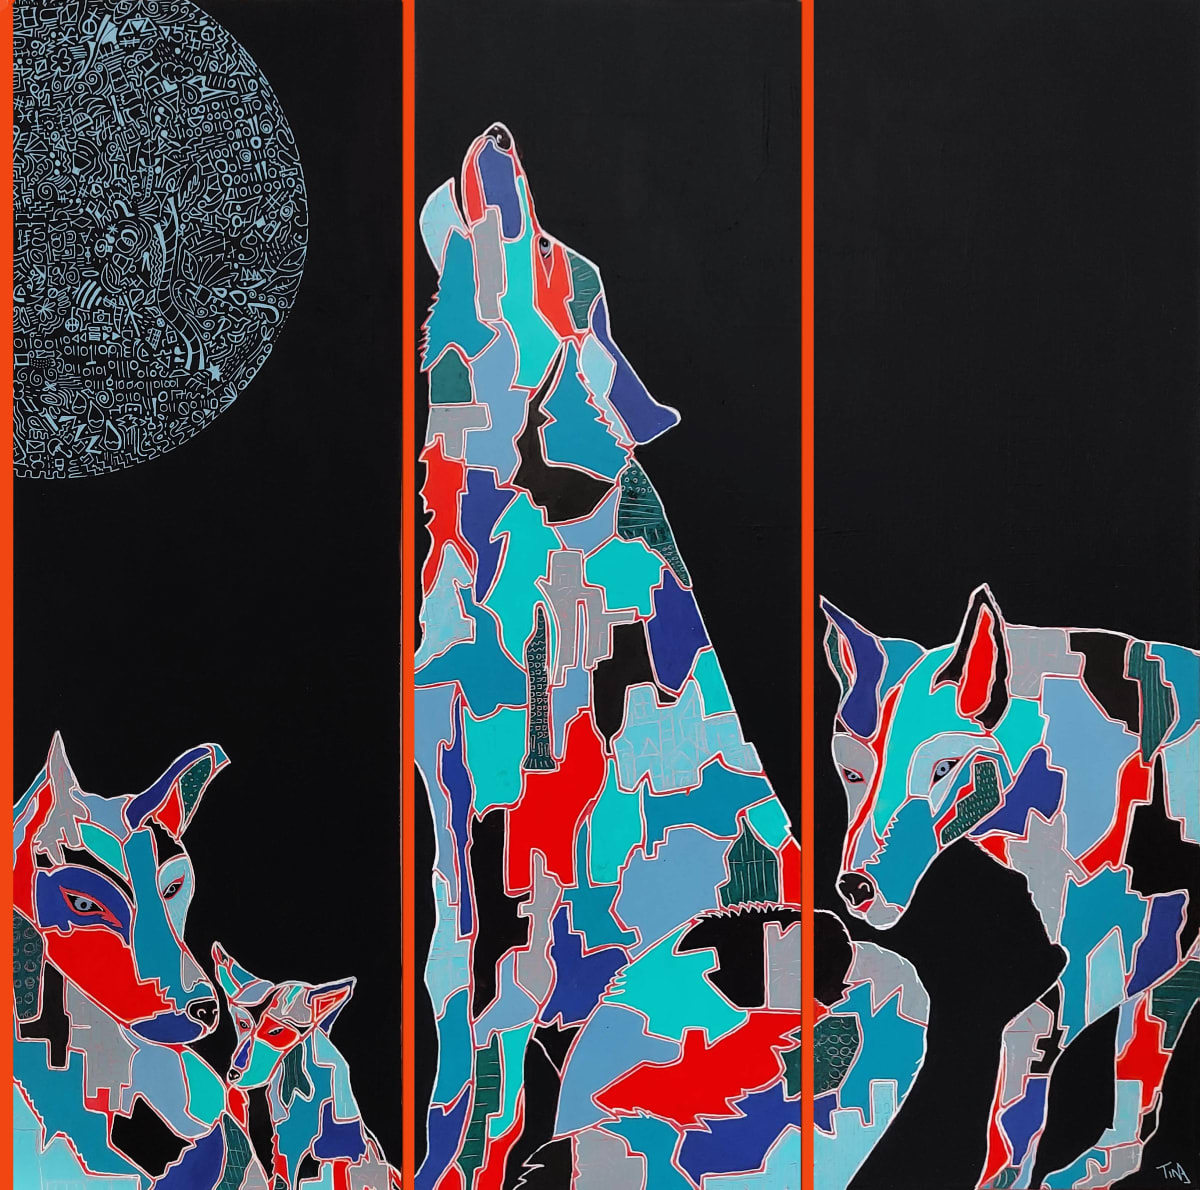 Flirting with Extinction (triptych) by Tina Alberni  Image: Triptych